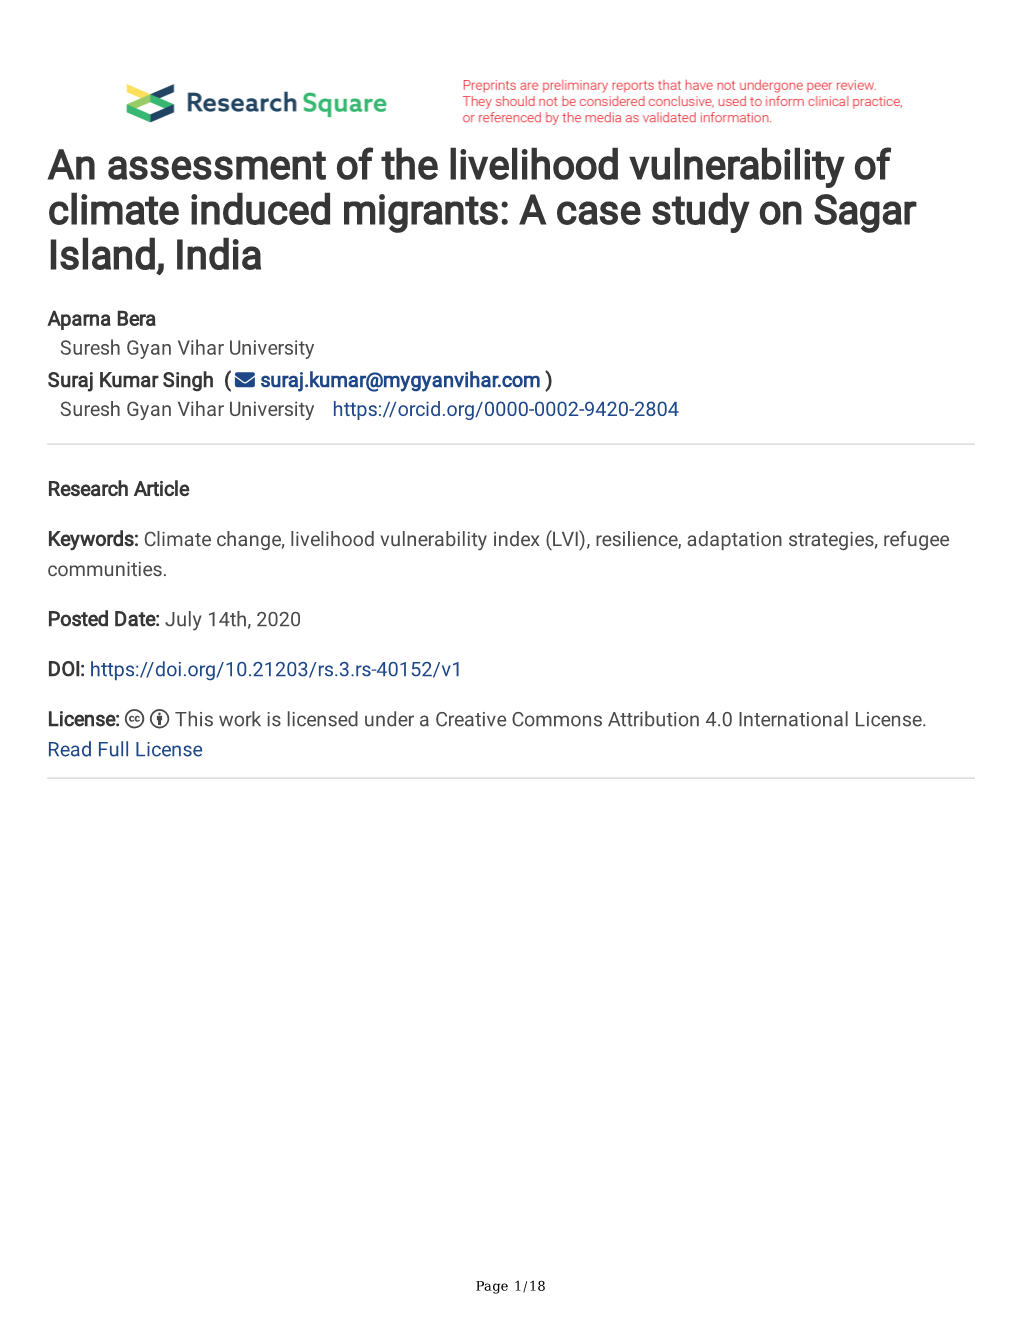 A Case Study on Sagar Island, India